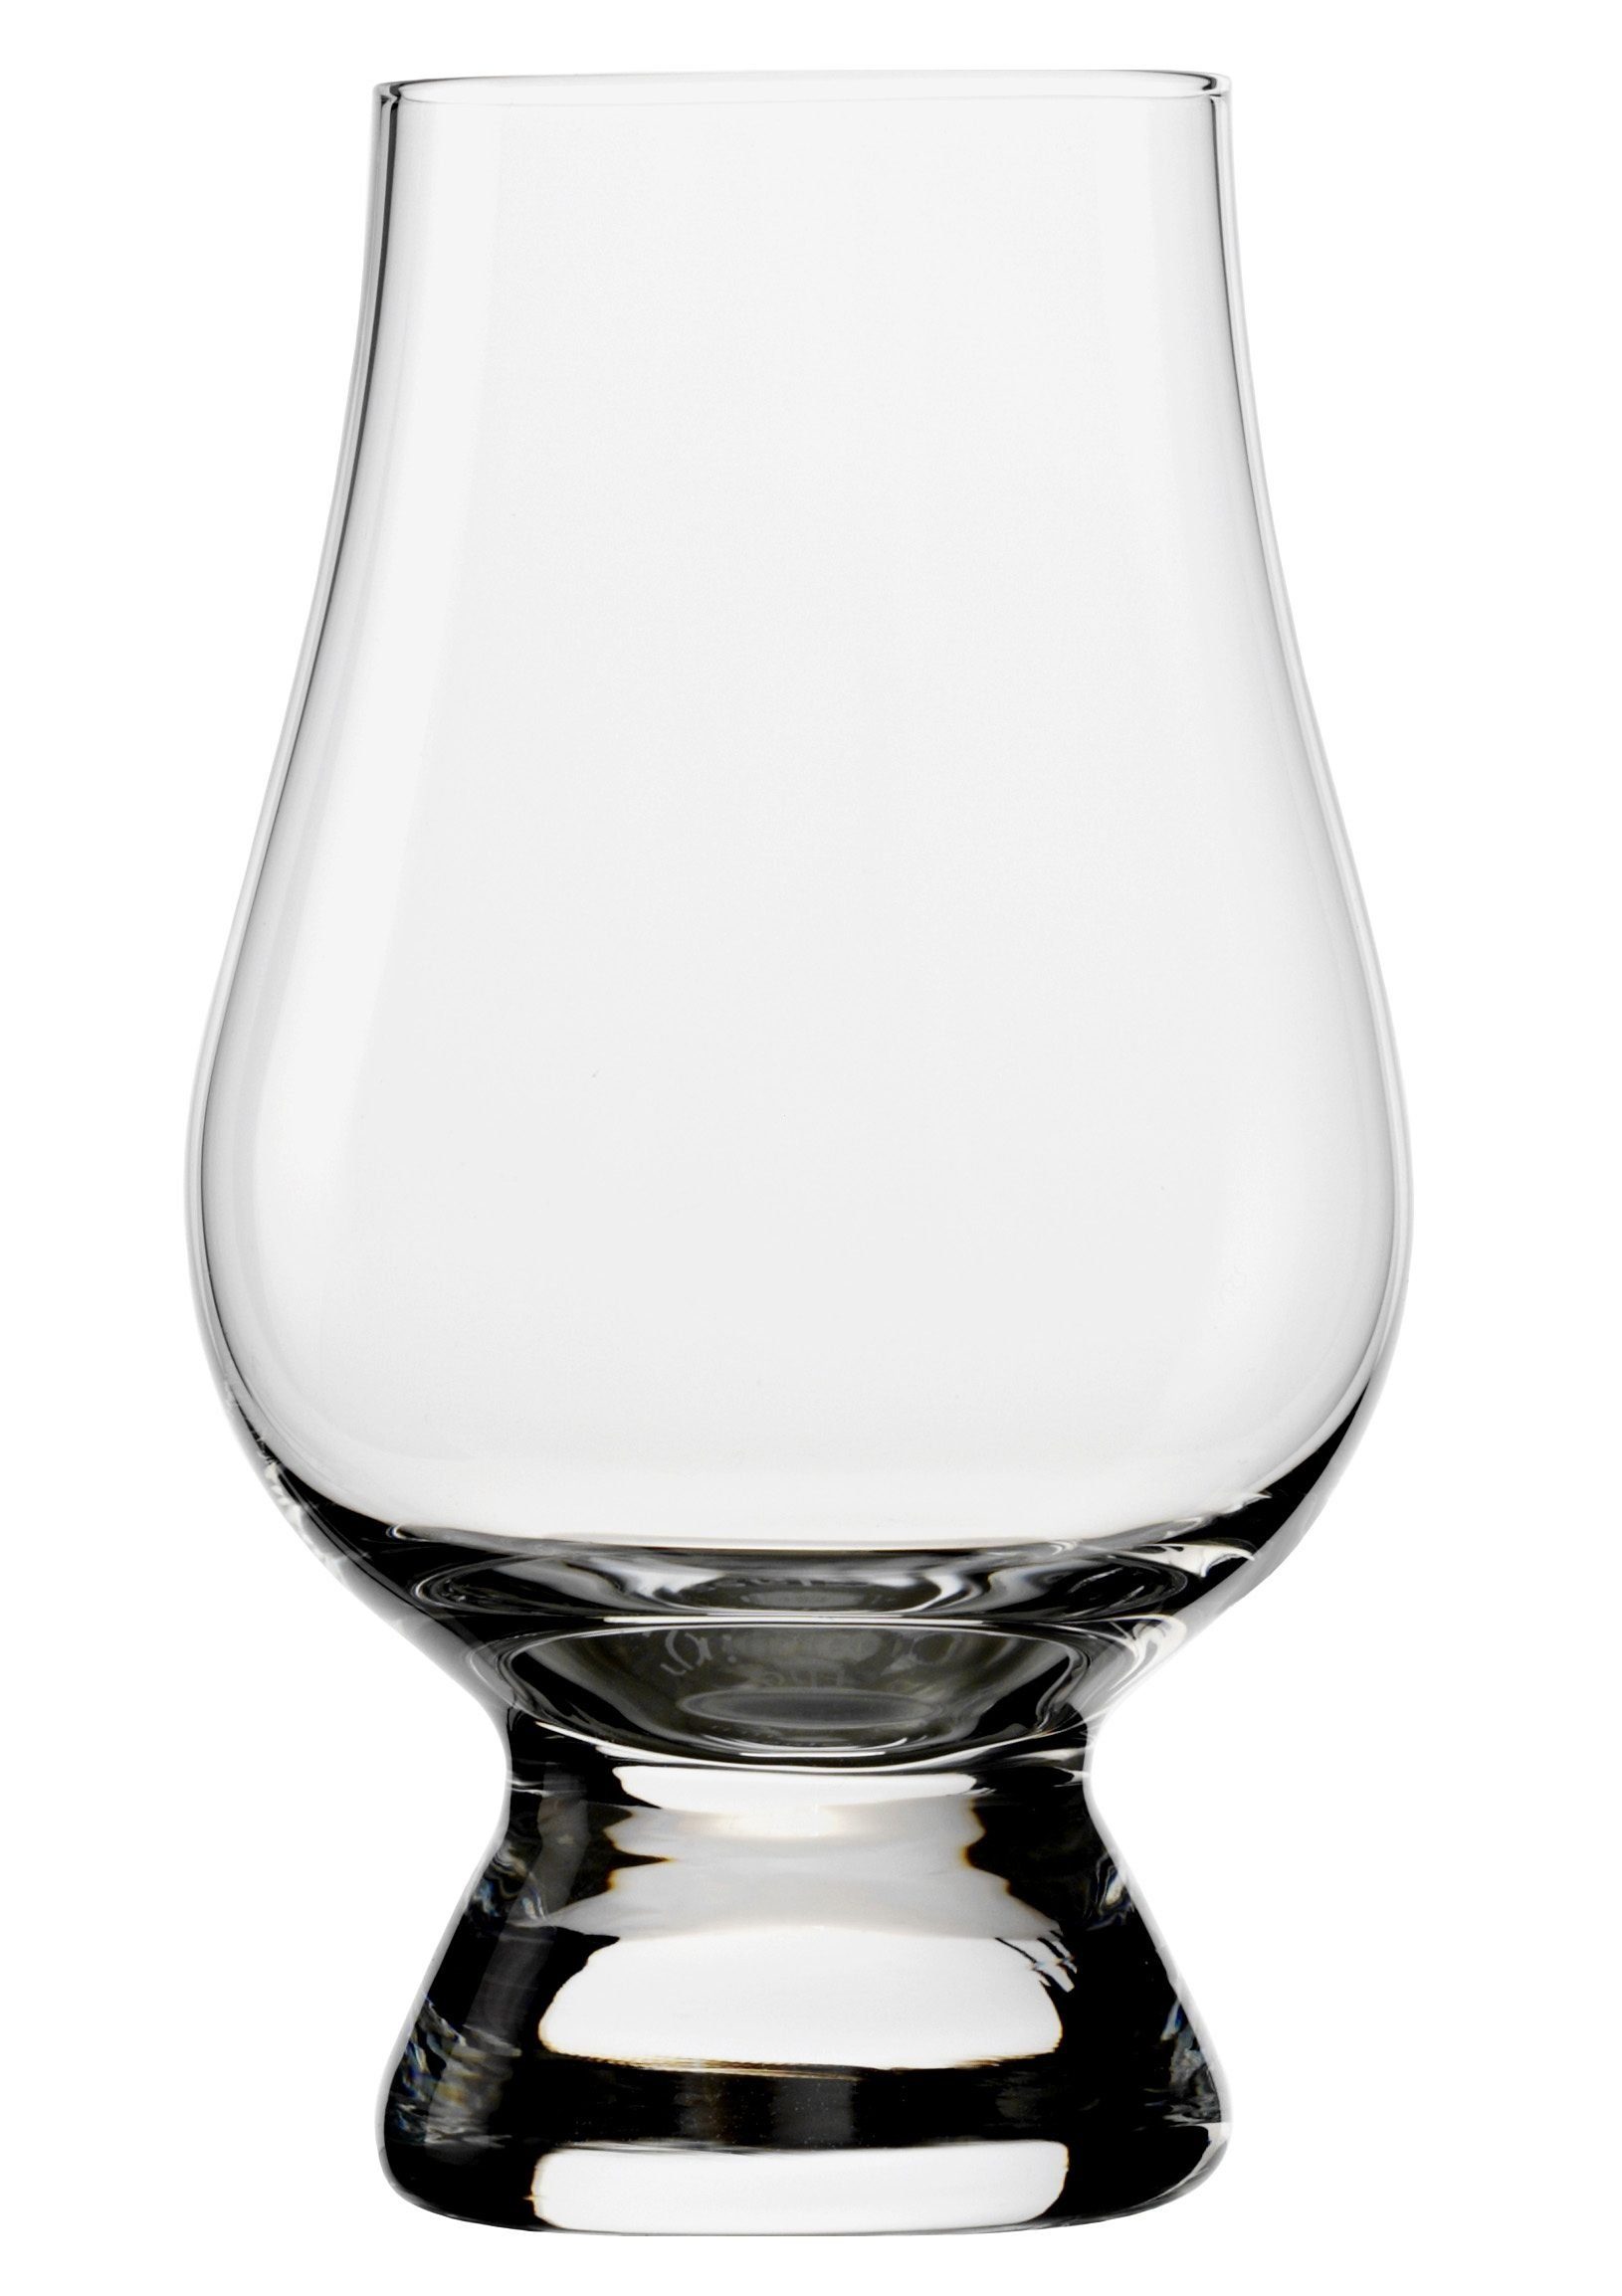 Stölzle Скло-Set Glencairn Glass, Kristallglas, spülmaschinenfest, 6-teilig